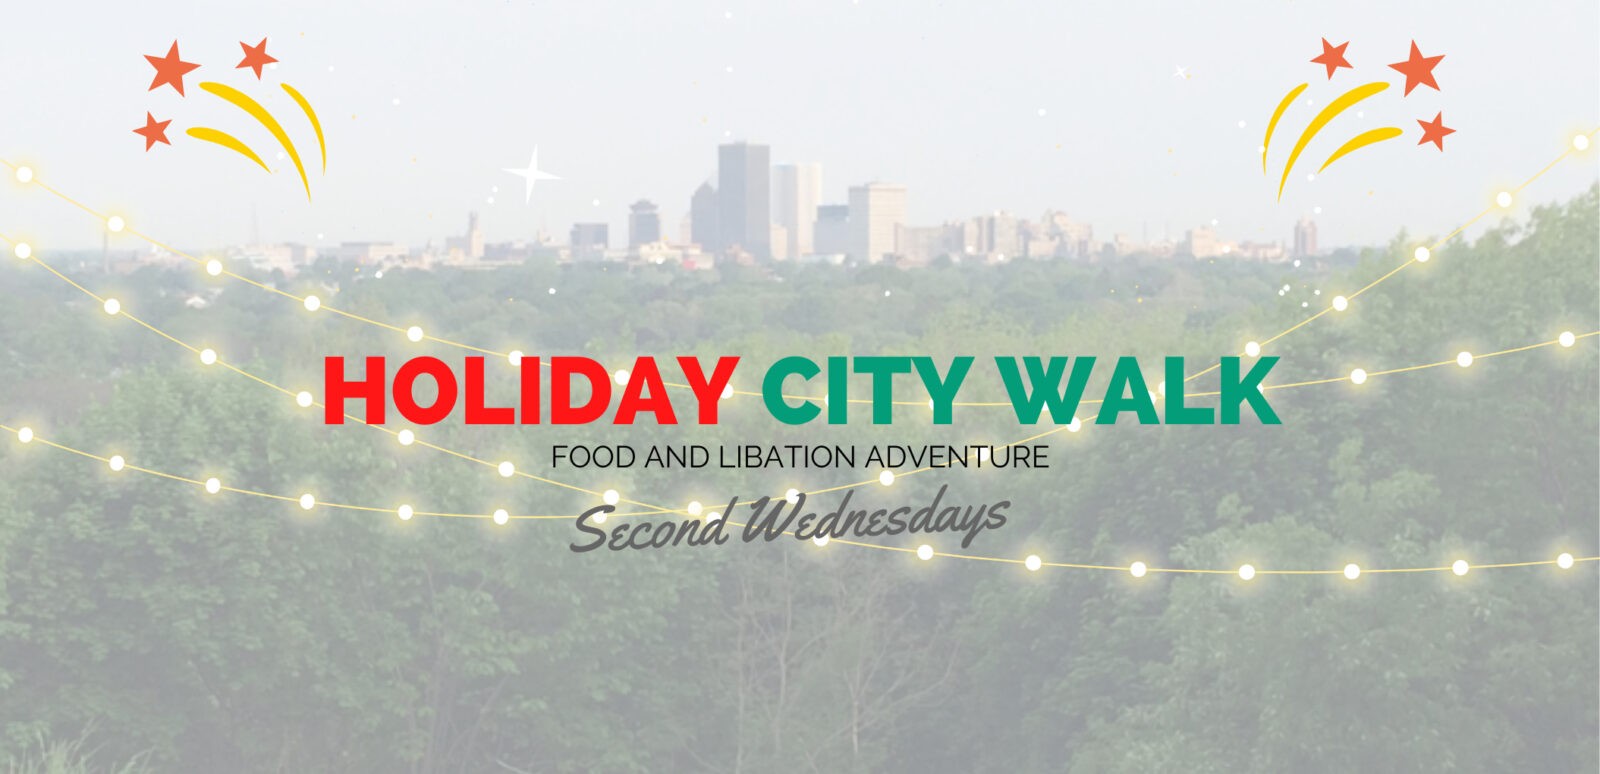 Holiday City Walk graphic